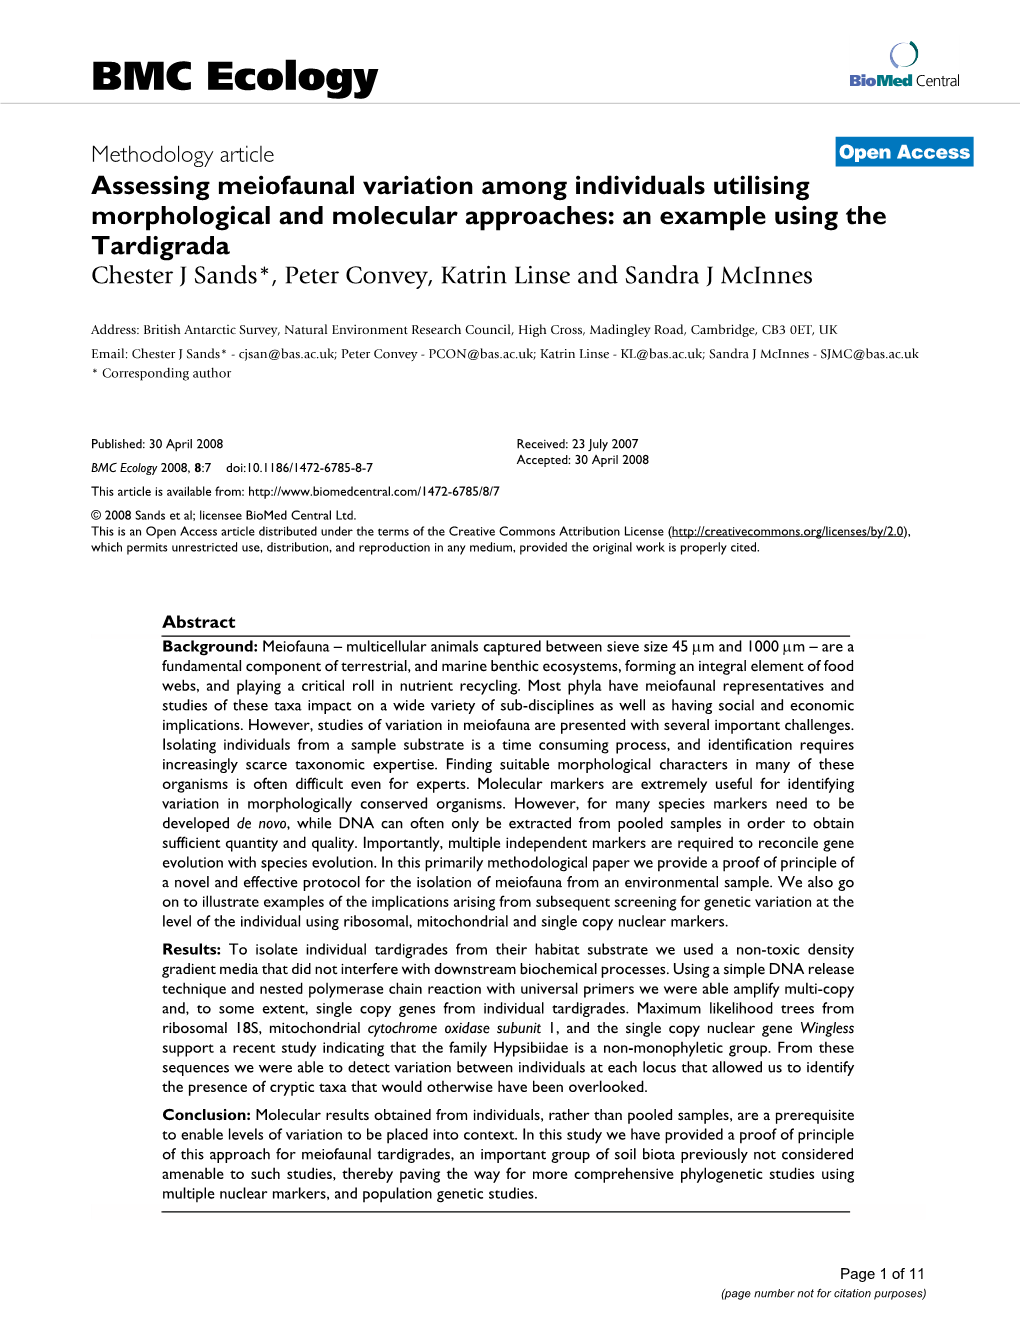 Assessing Meiofaunal Variation Among Individuals Utilising Morphological and Molecular Approaches: an Example Using the Tardigrada